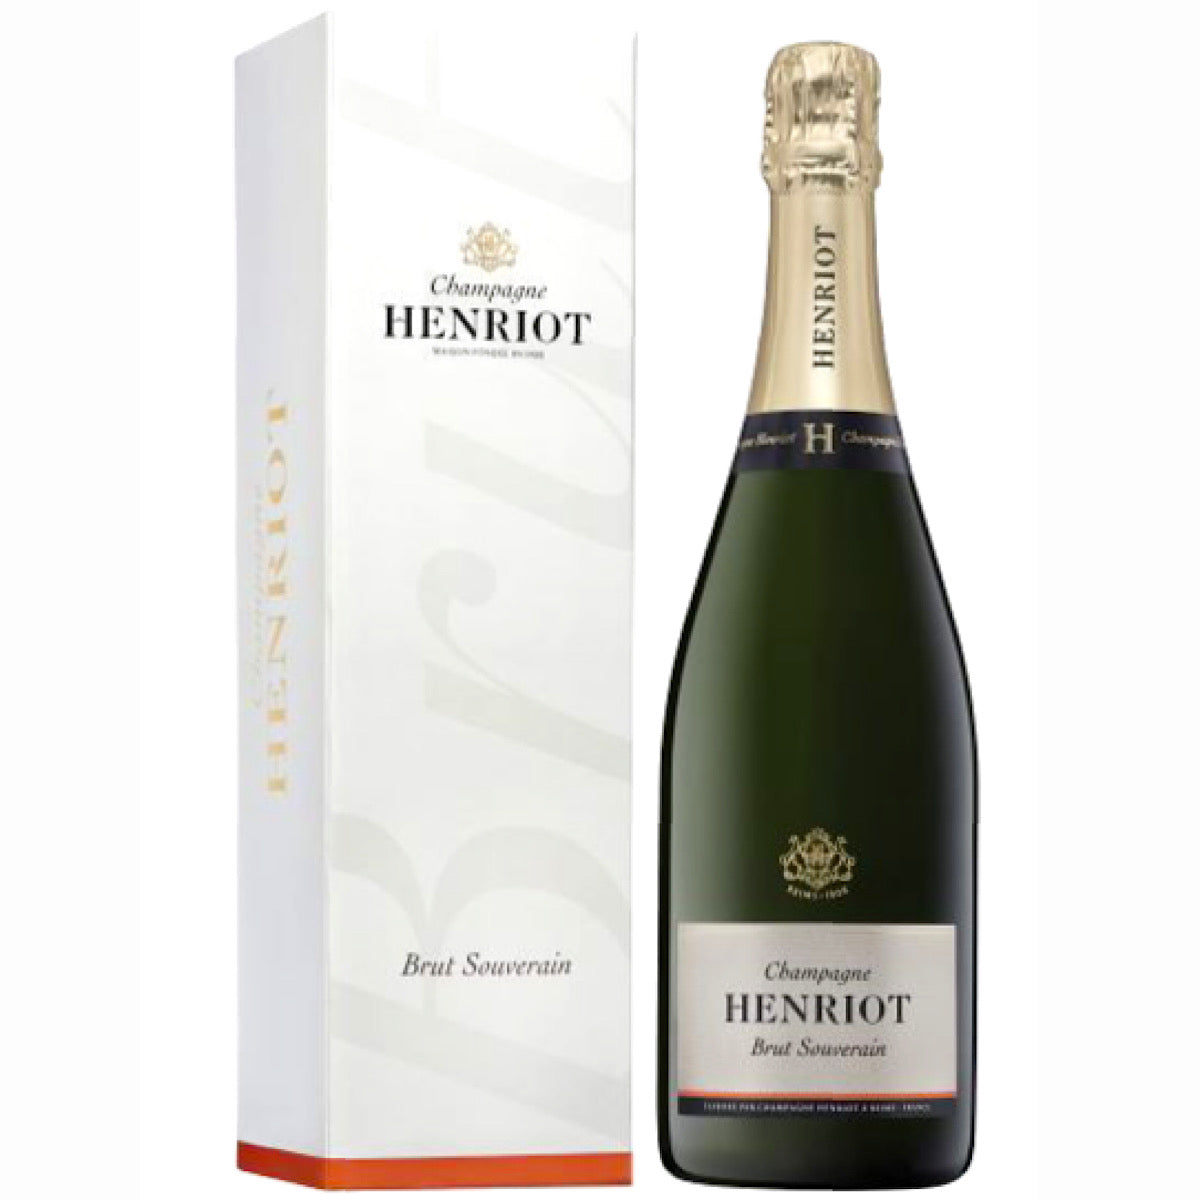 Champagne Henriot Brut Souverain with Gift Box.